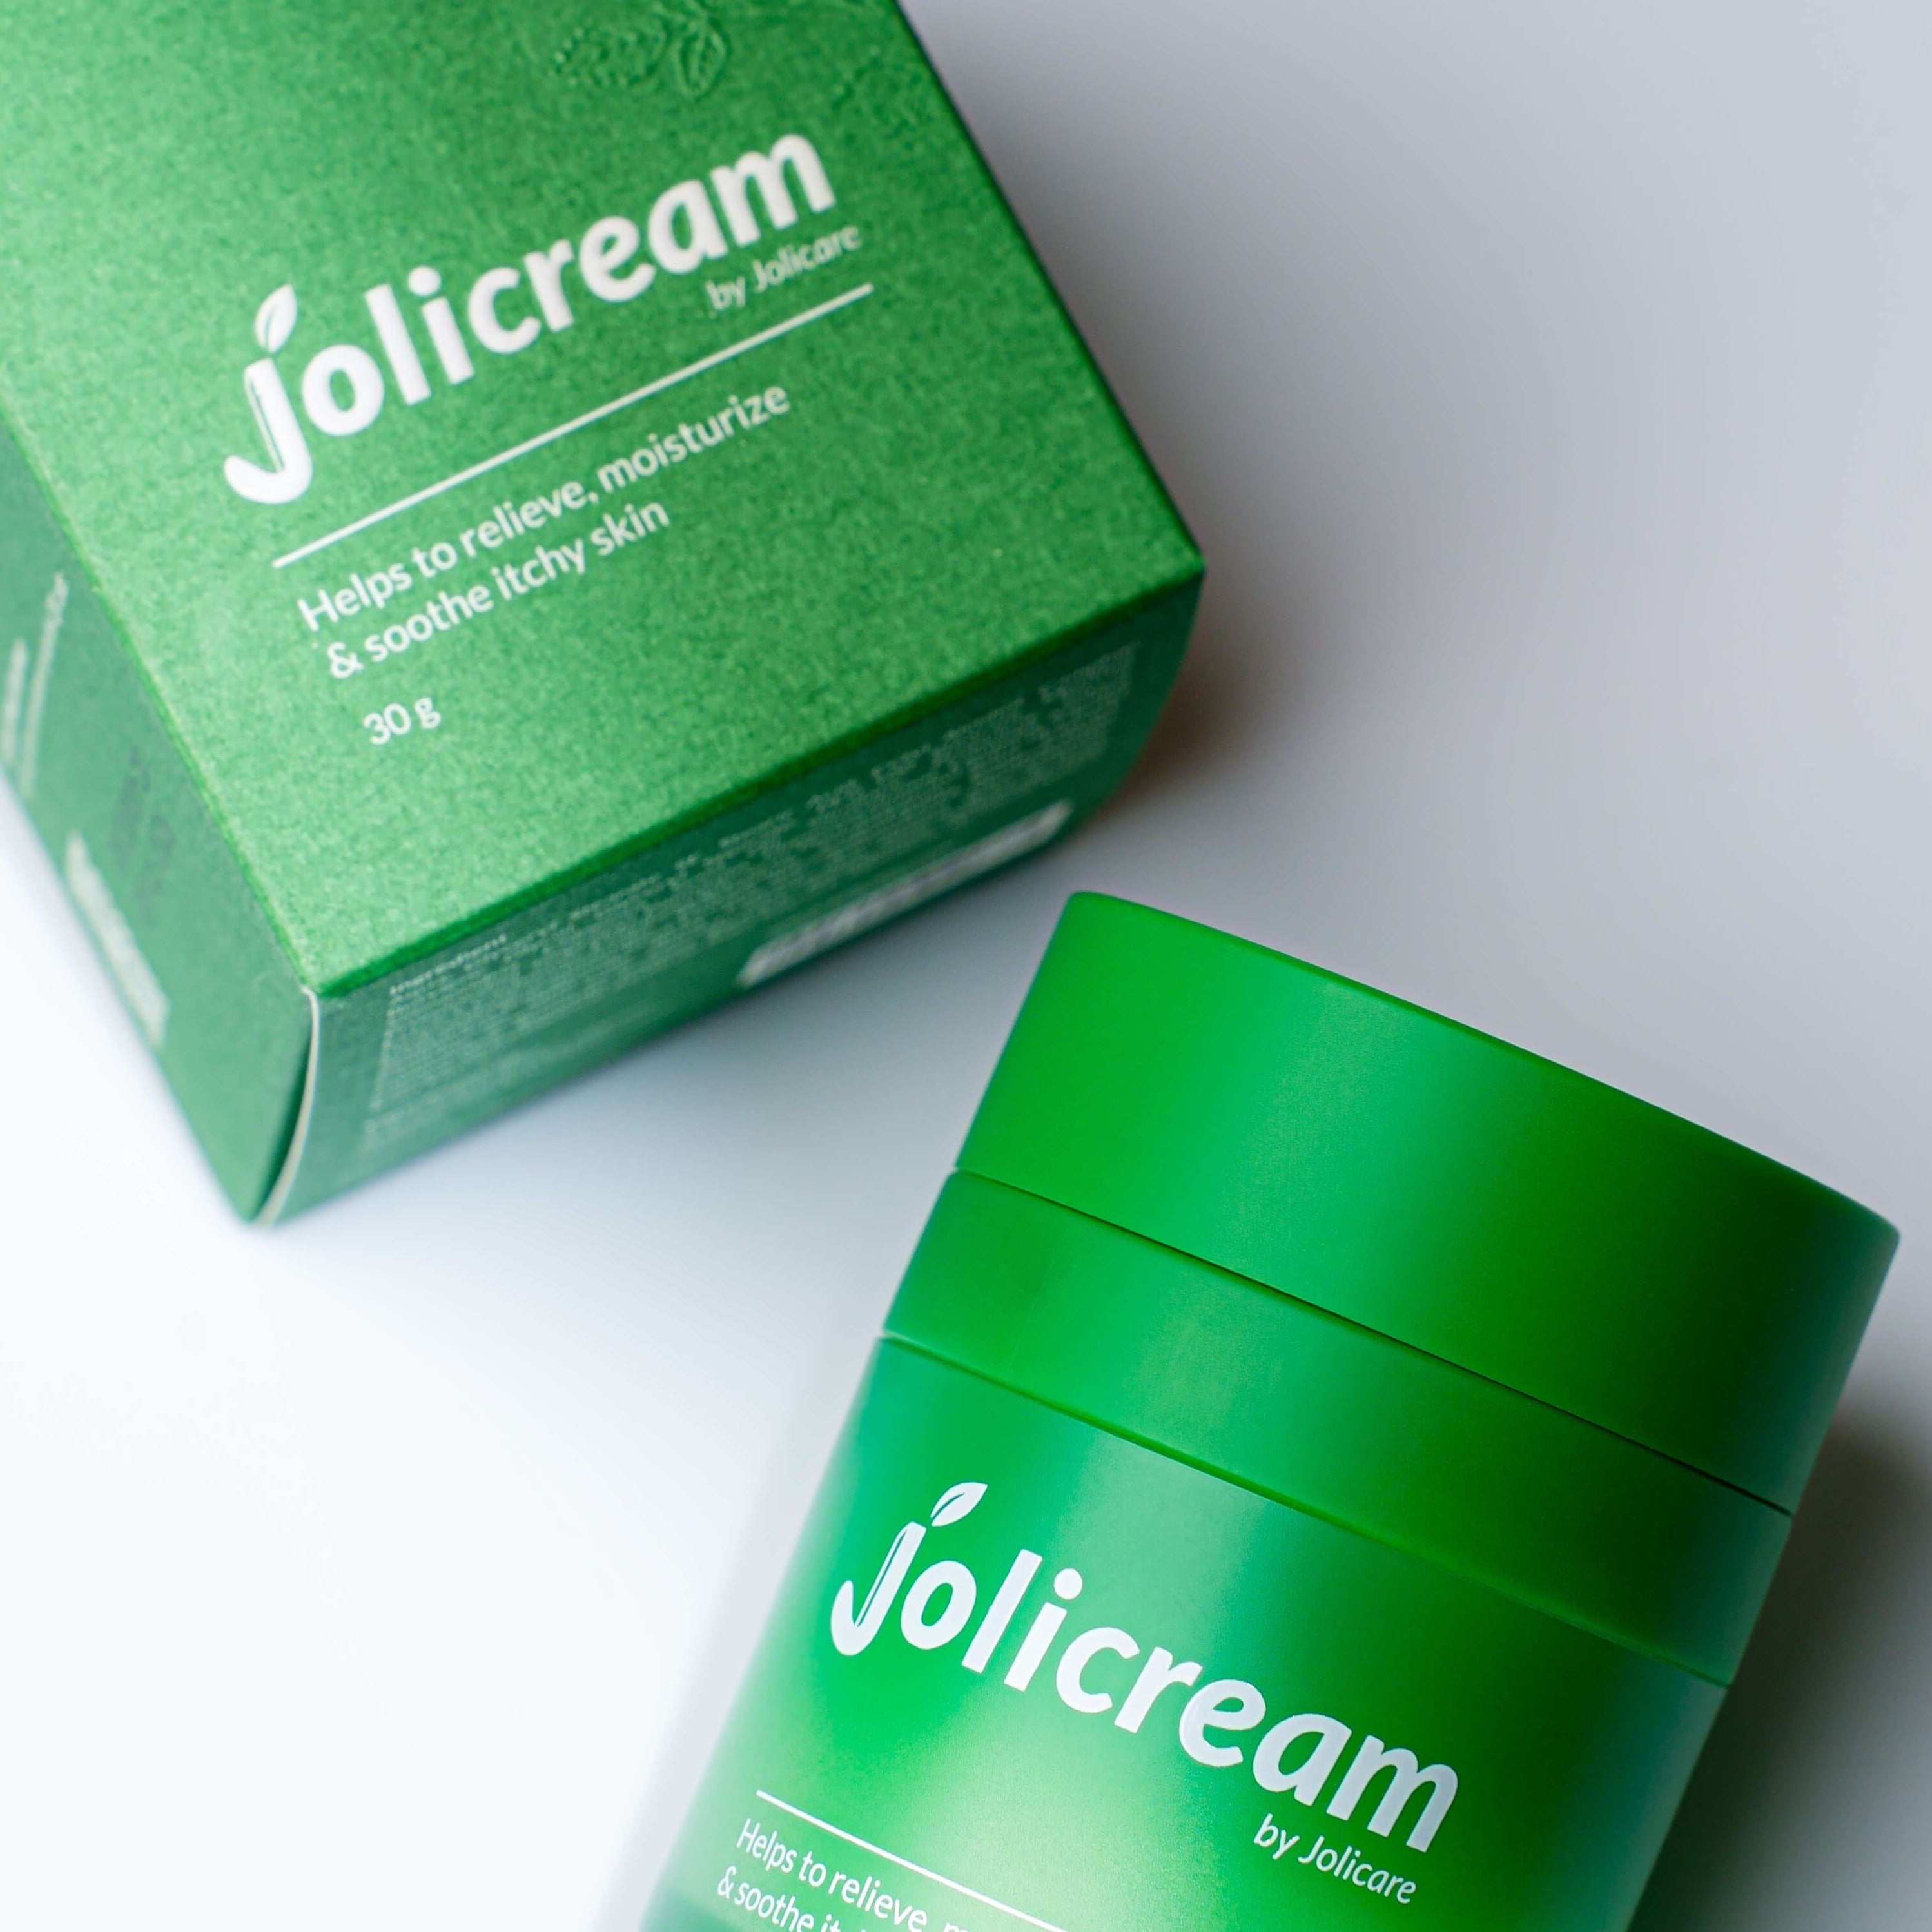 Jolicare Treatment Set - Free Jolicare Cloud Sponge (Limited Promo)